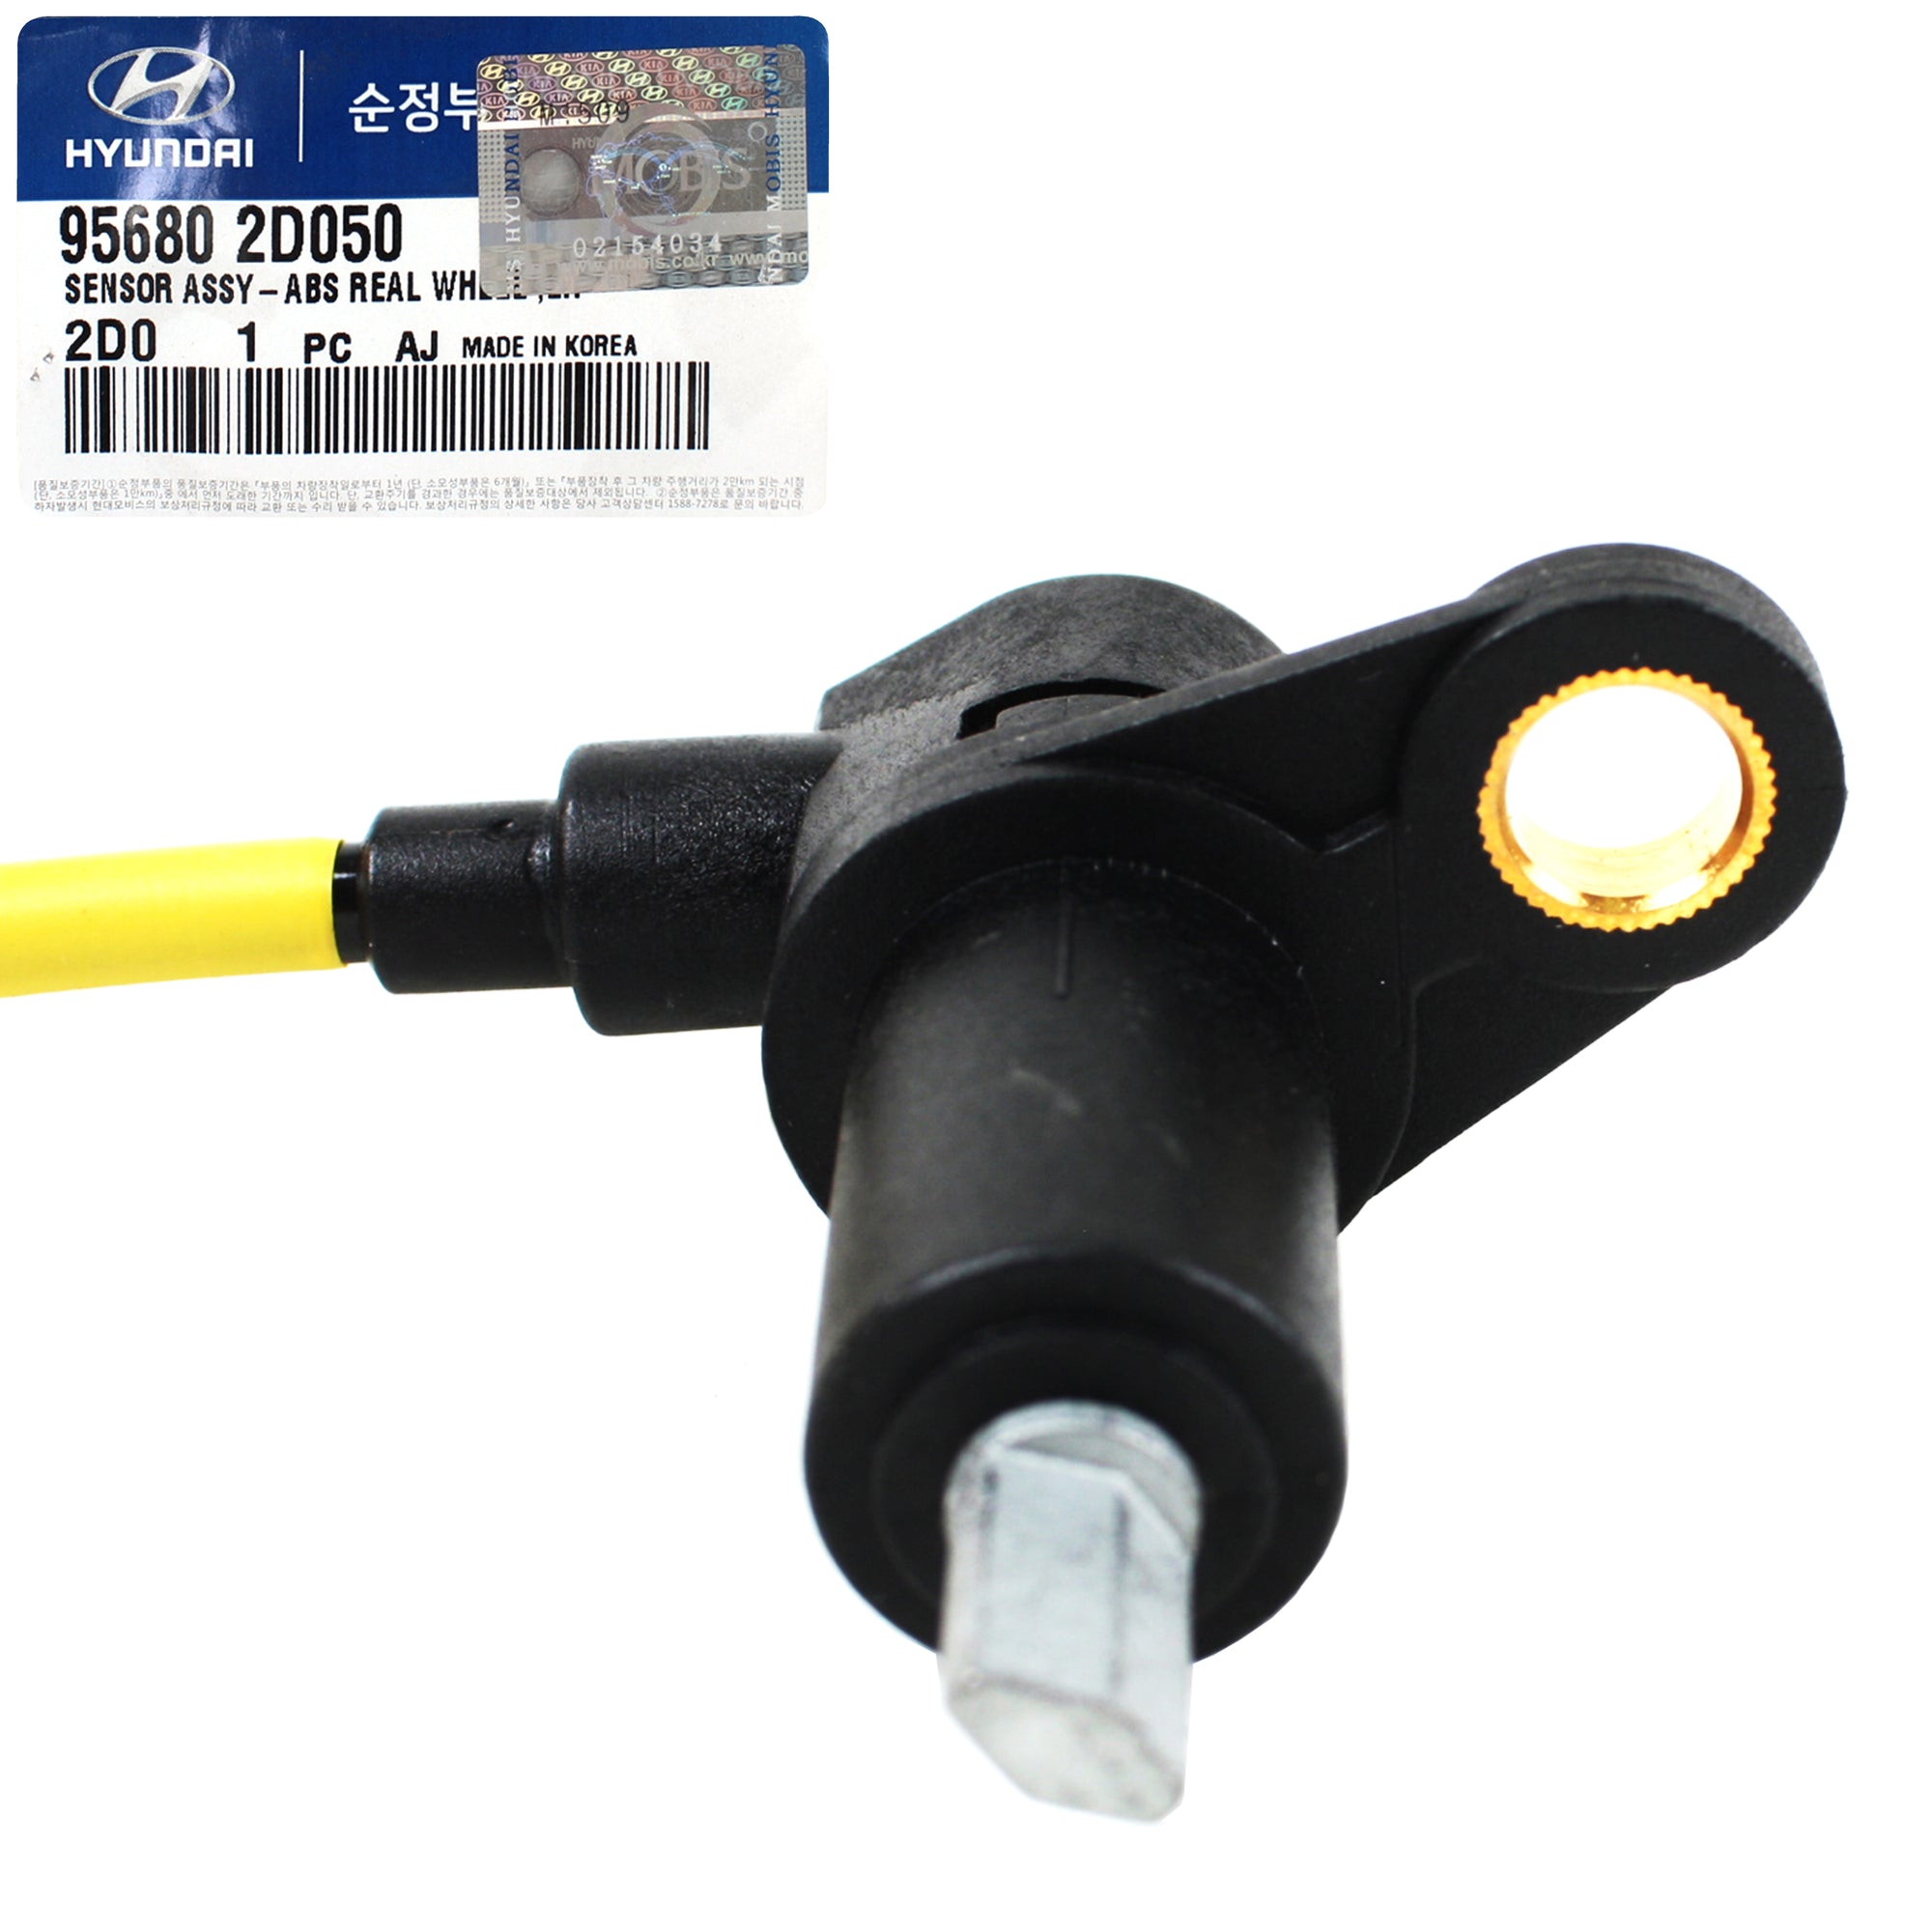 GENUINE ABS Speed Sensor REAR LEFT LH for 01-09 Elantra Spectra 956802D050